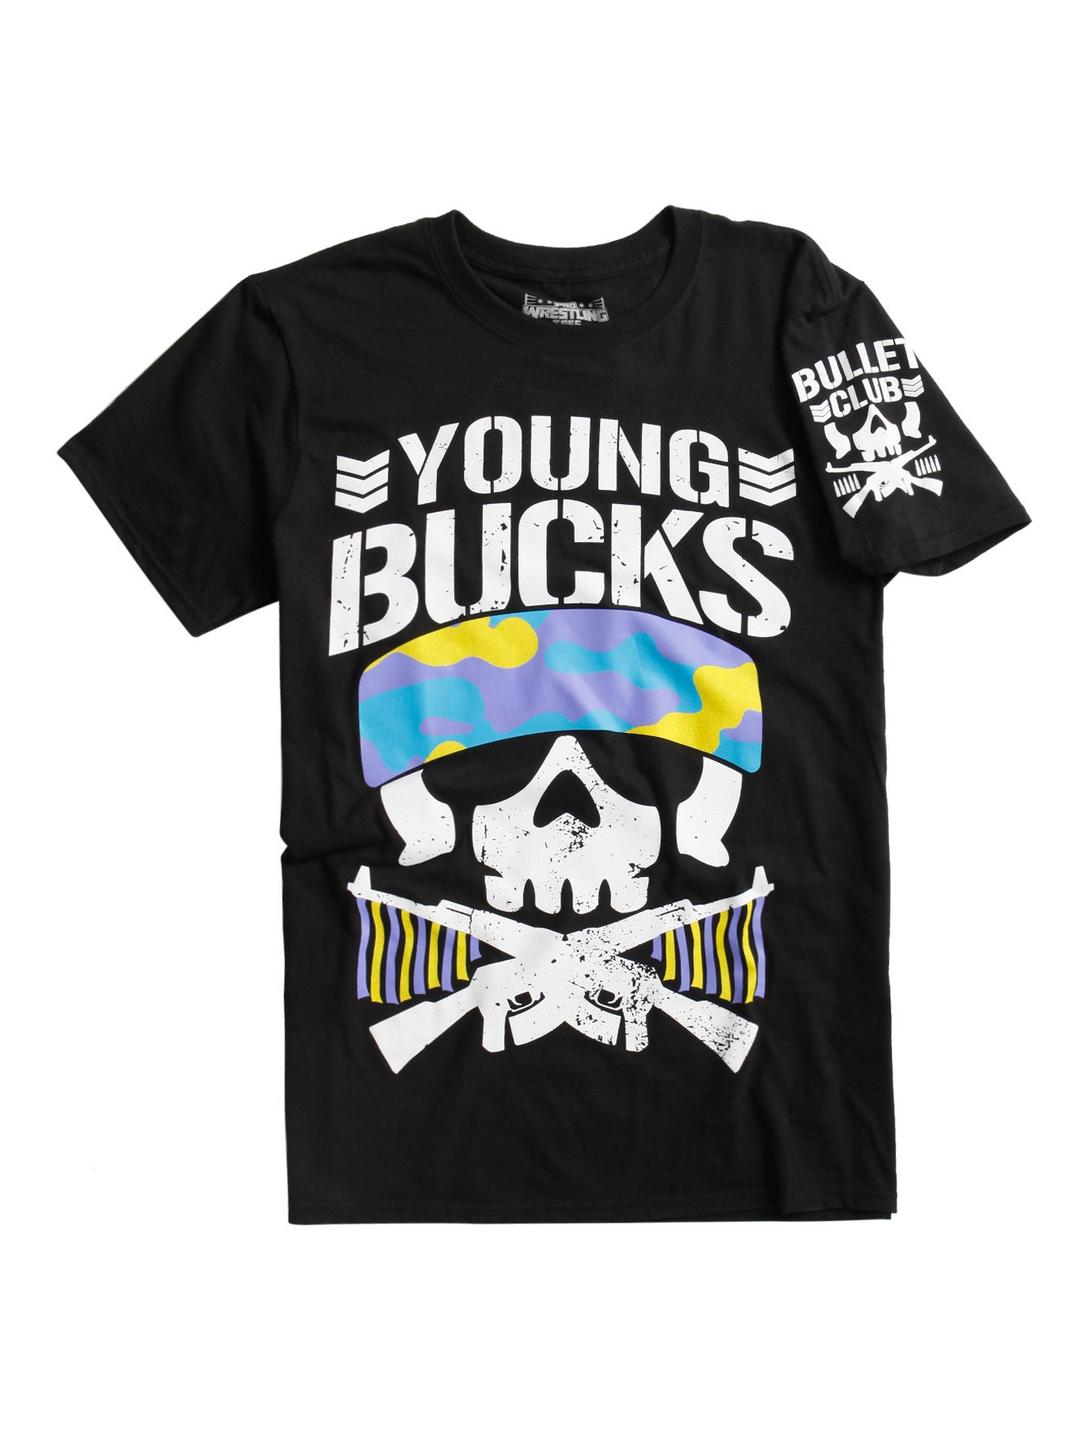 New Japan Pro-Wrestling Bullet Club Young Bucks T-Shirt, BLACK, hi-res